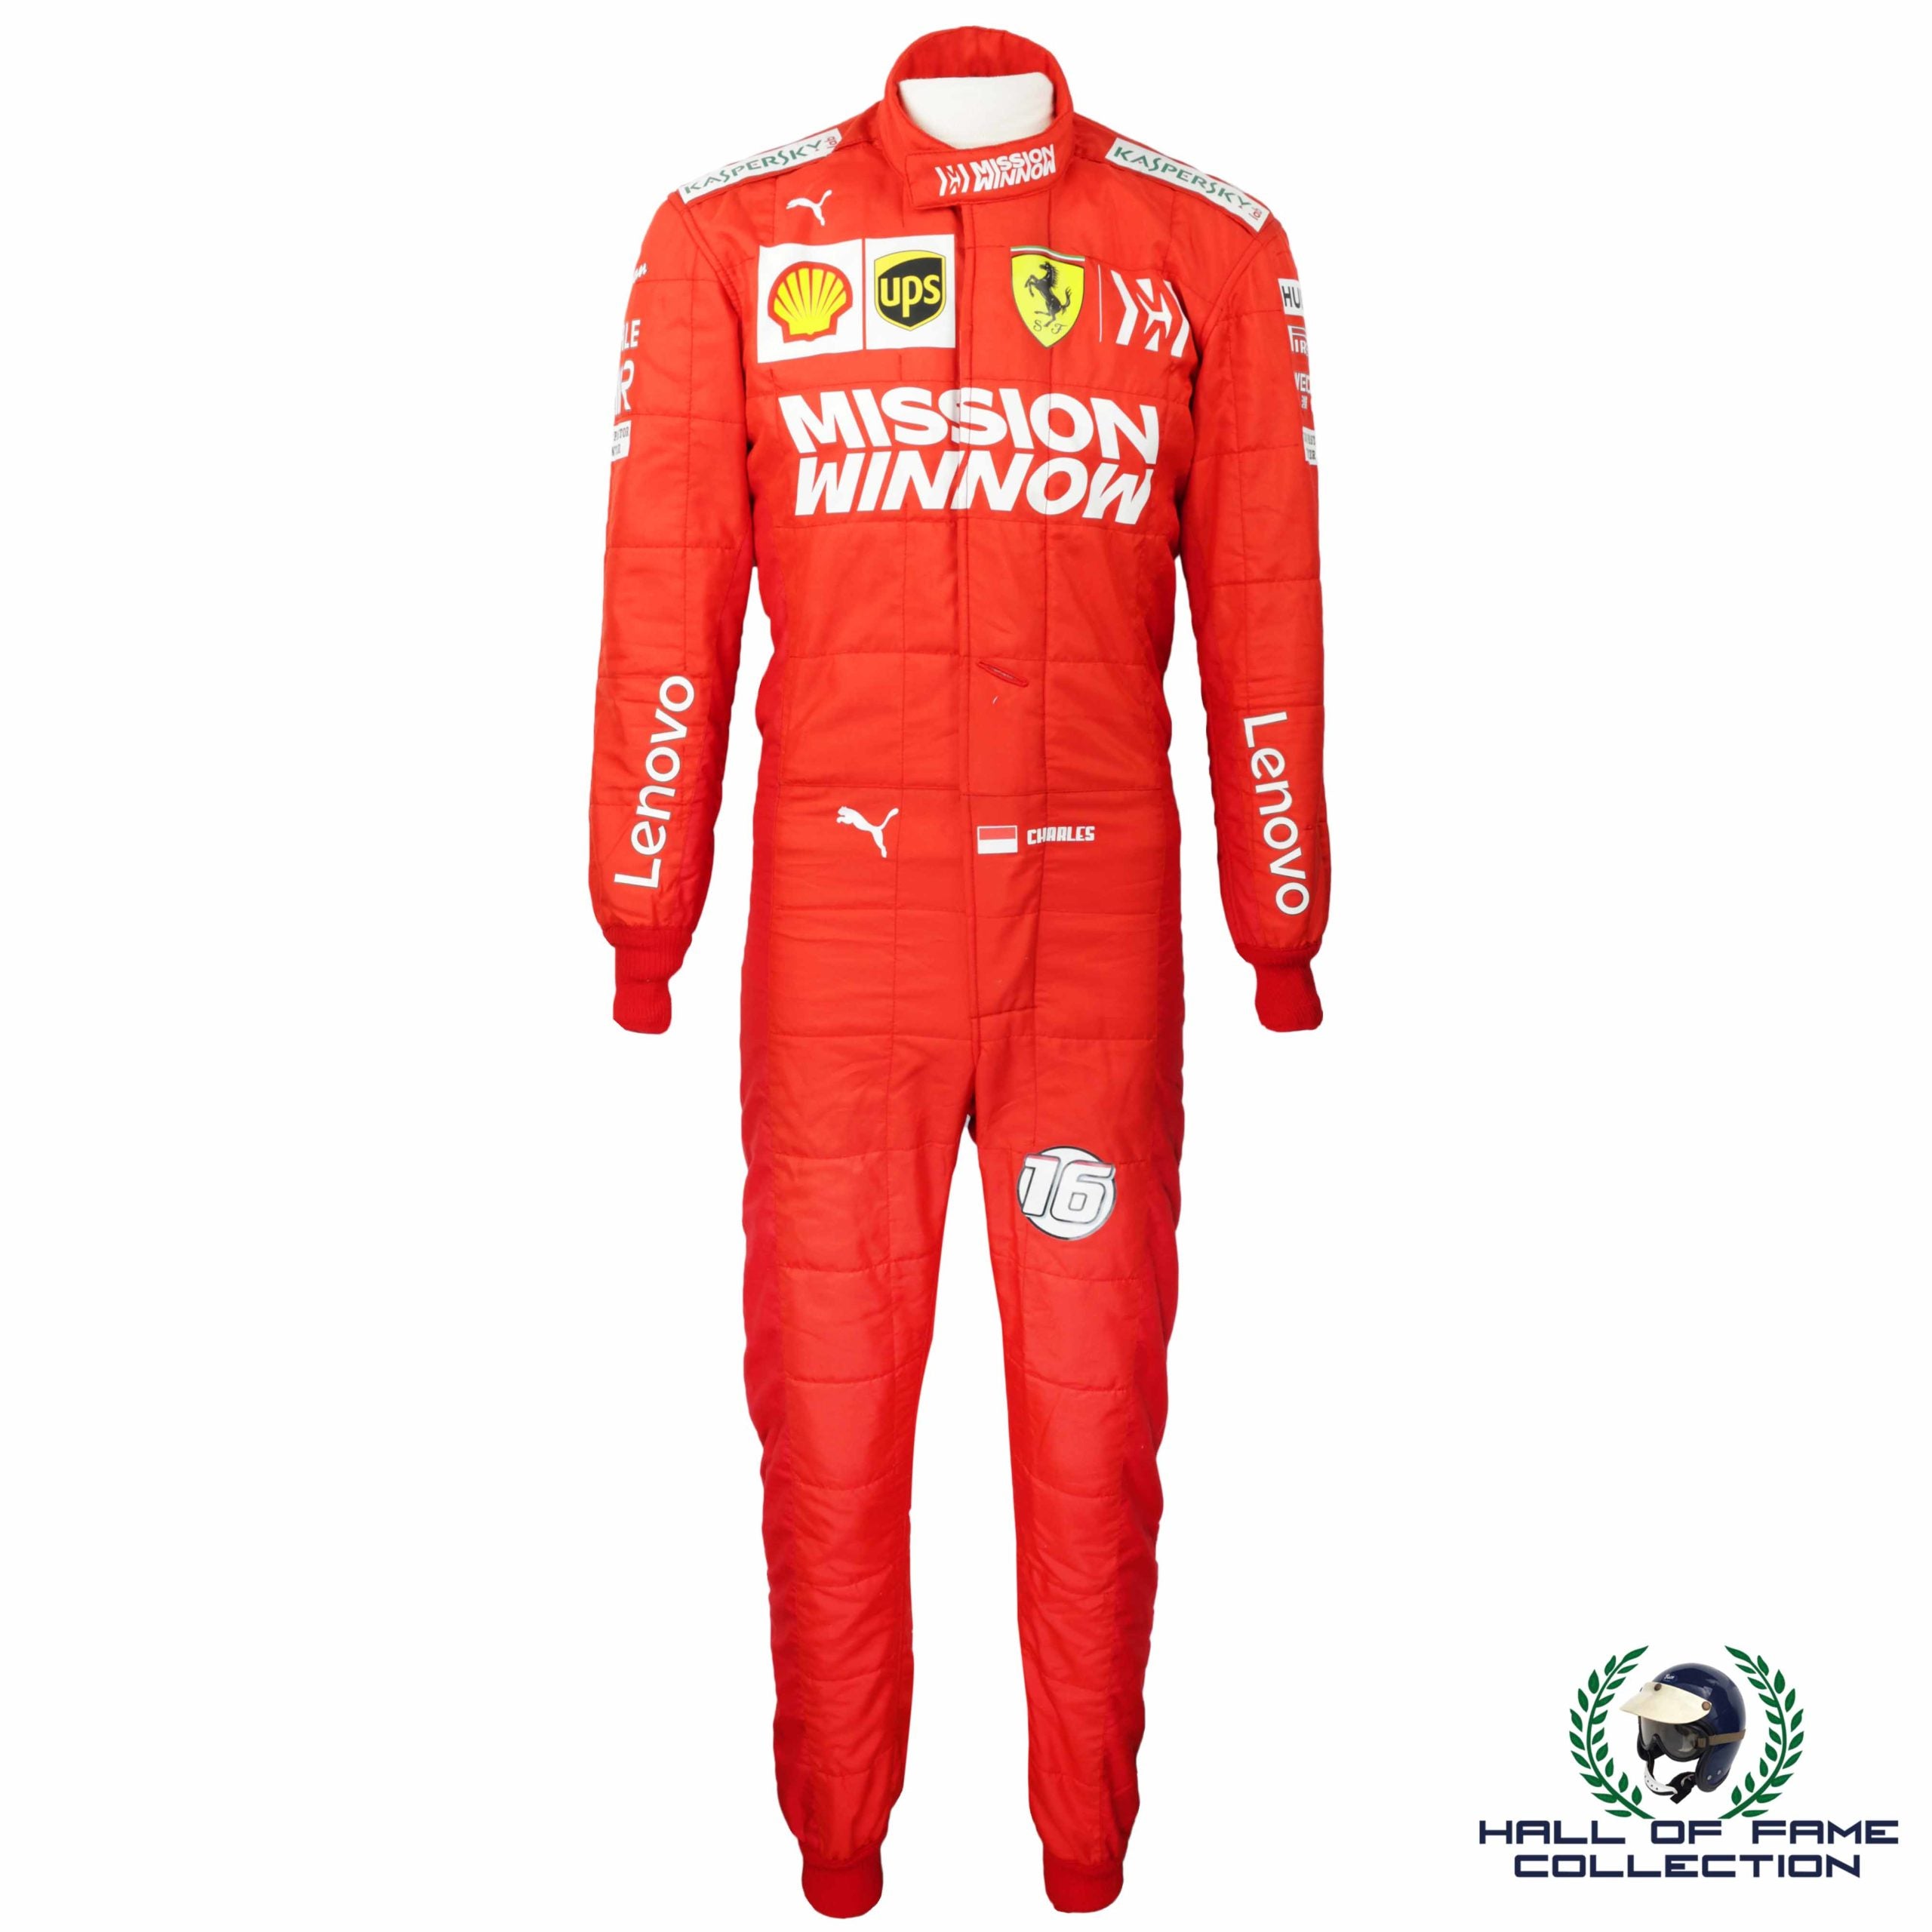 2019 Charles Leclerc Race Used Mission Winnow Scuderia Ferrari F1 Suit